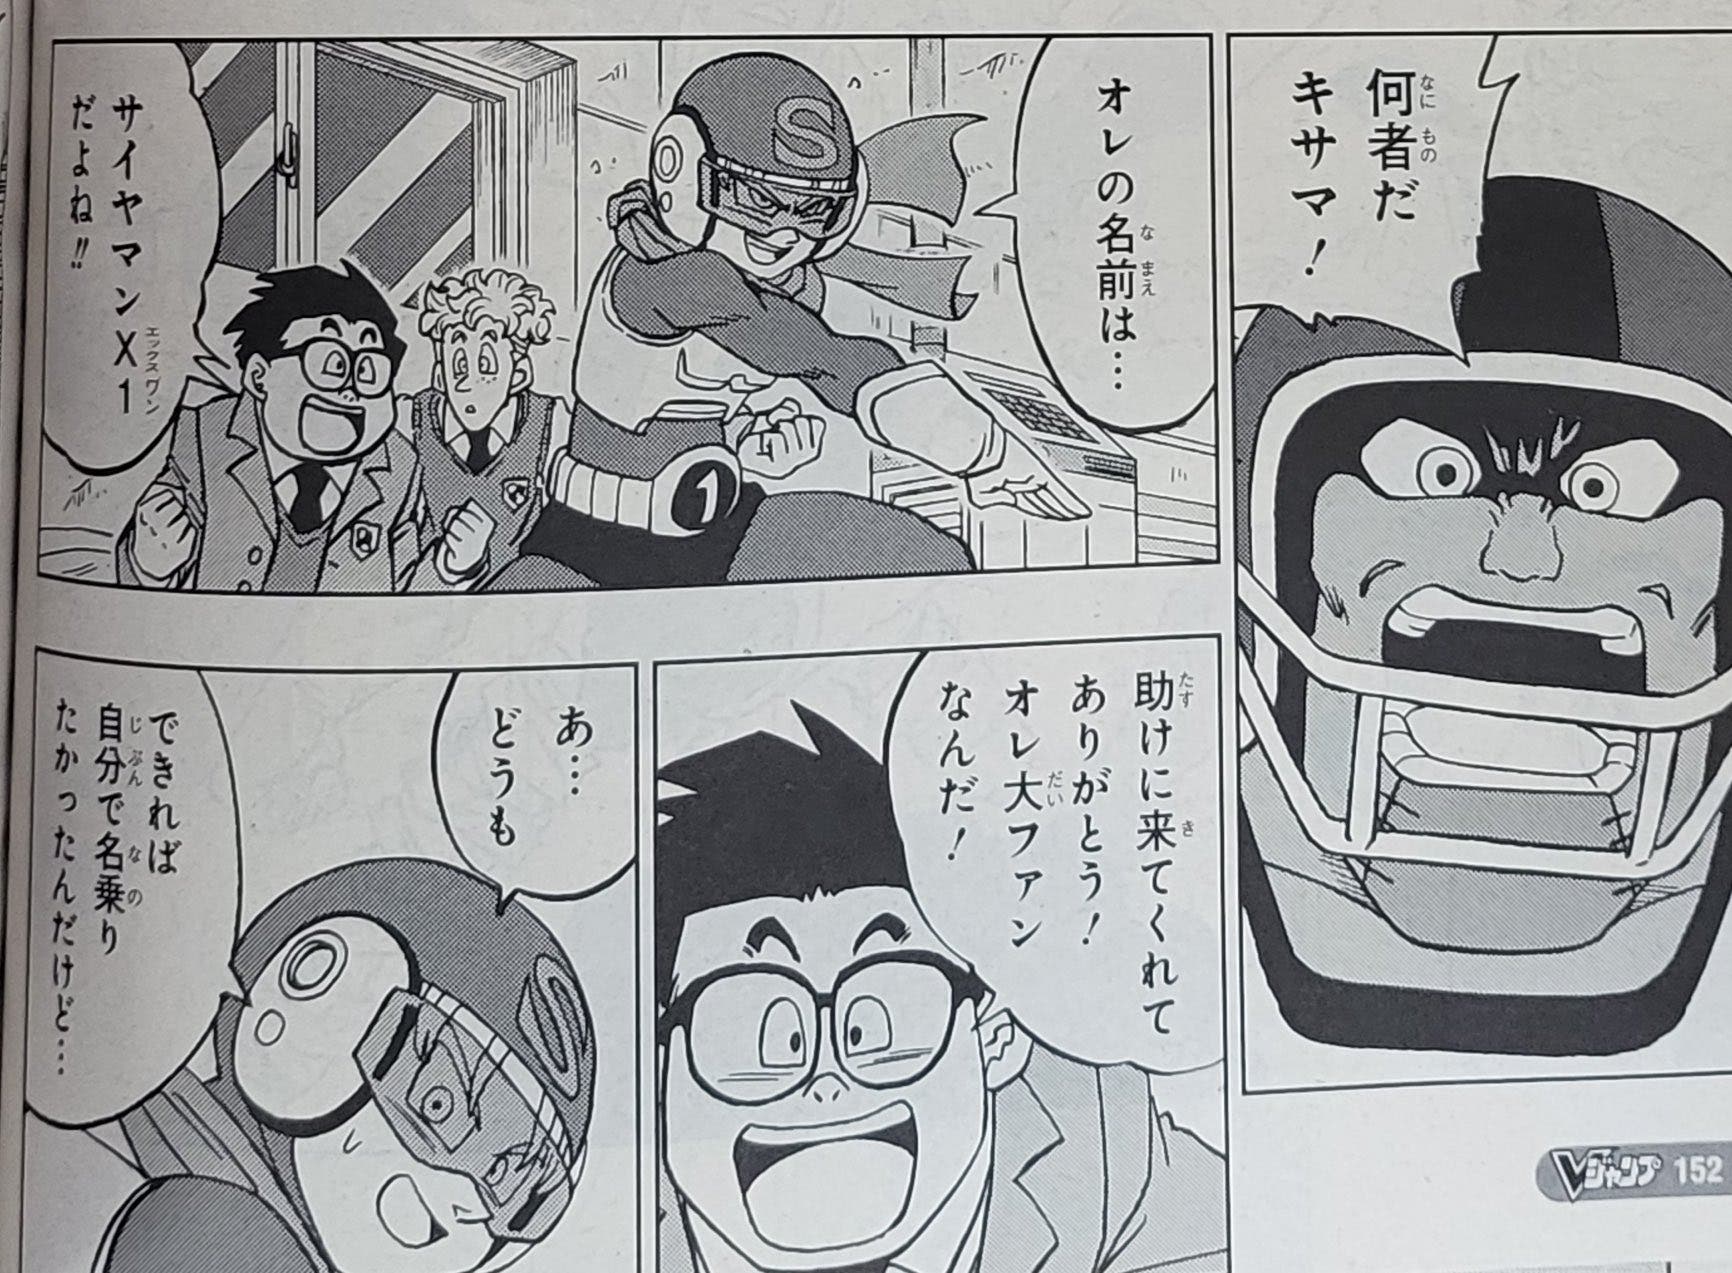 Capitulo 88 del manga de Dragon Ball Super 🙌🏼 parte 2 en los comenta